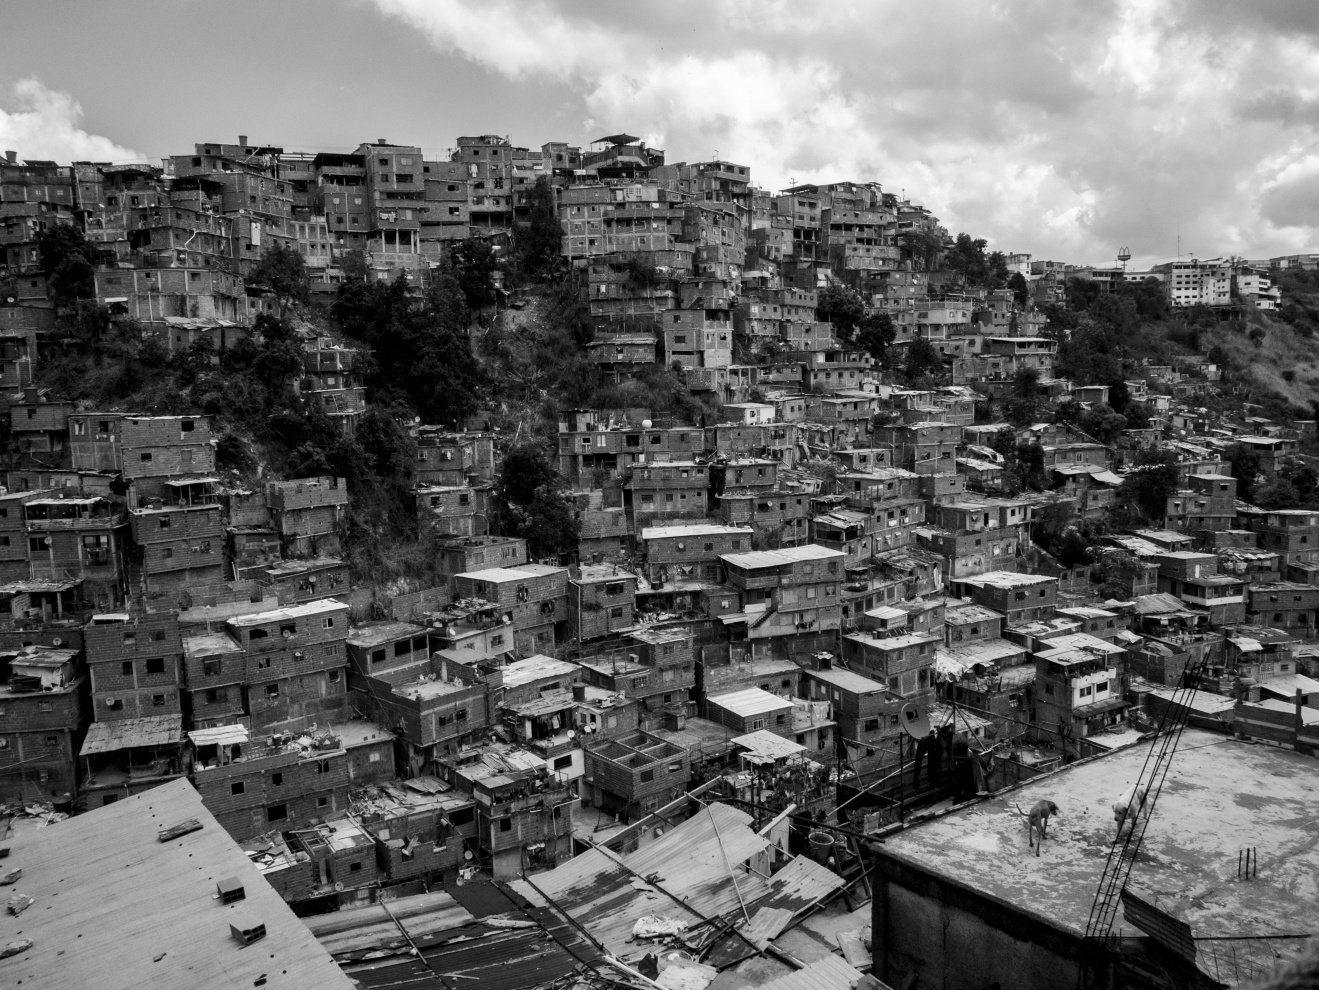 Venezuela; Miranda; Petare; 2015

View of a Barrio of Petare. The high density slum extends both vertically and horizontally with precarious and unstable shacks.